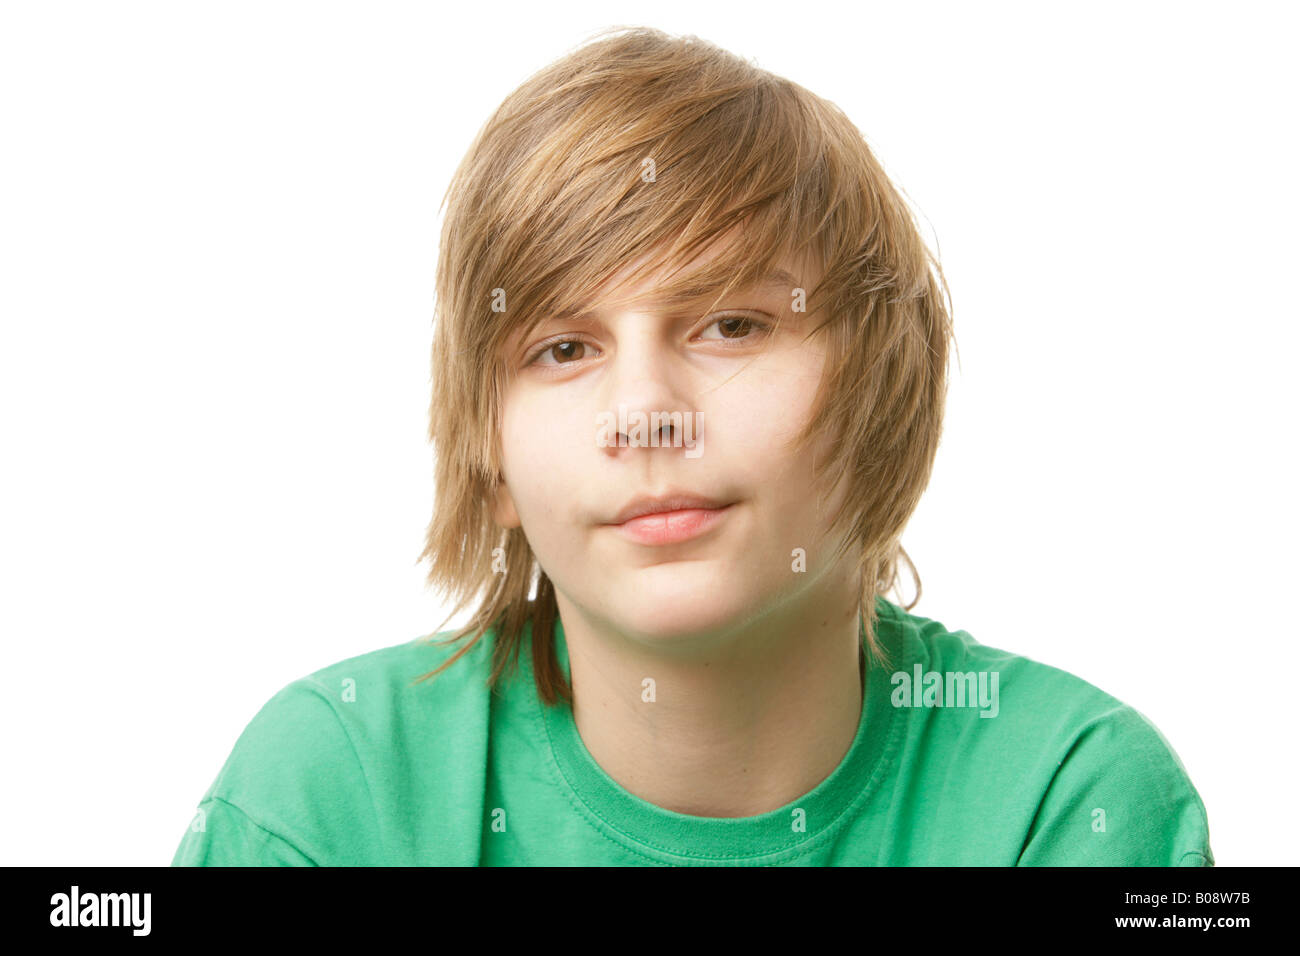 13-year-old boy wearing a green t-shirt Stock Photo